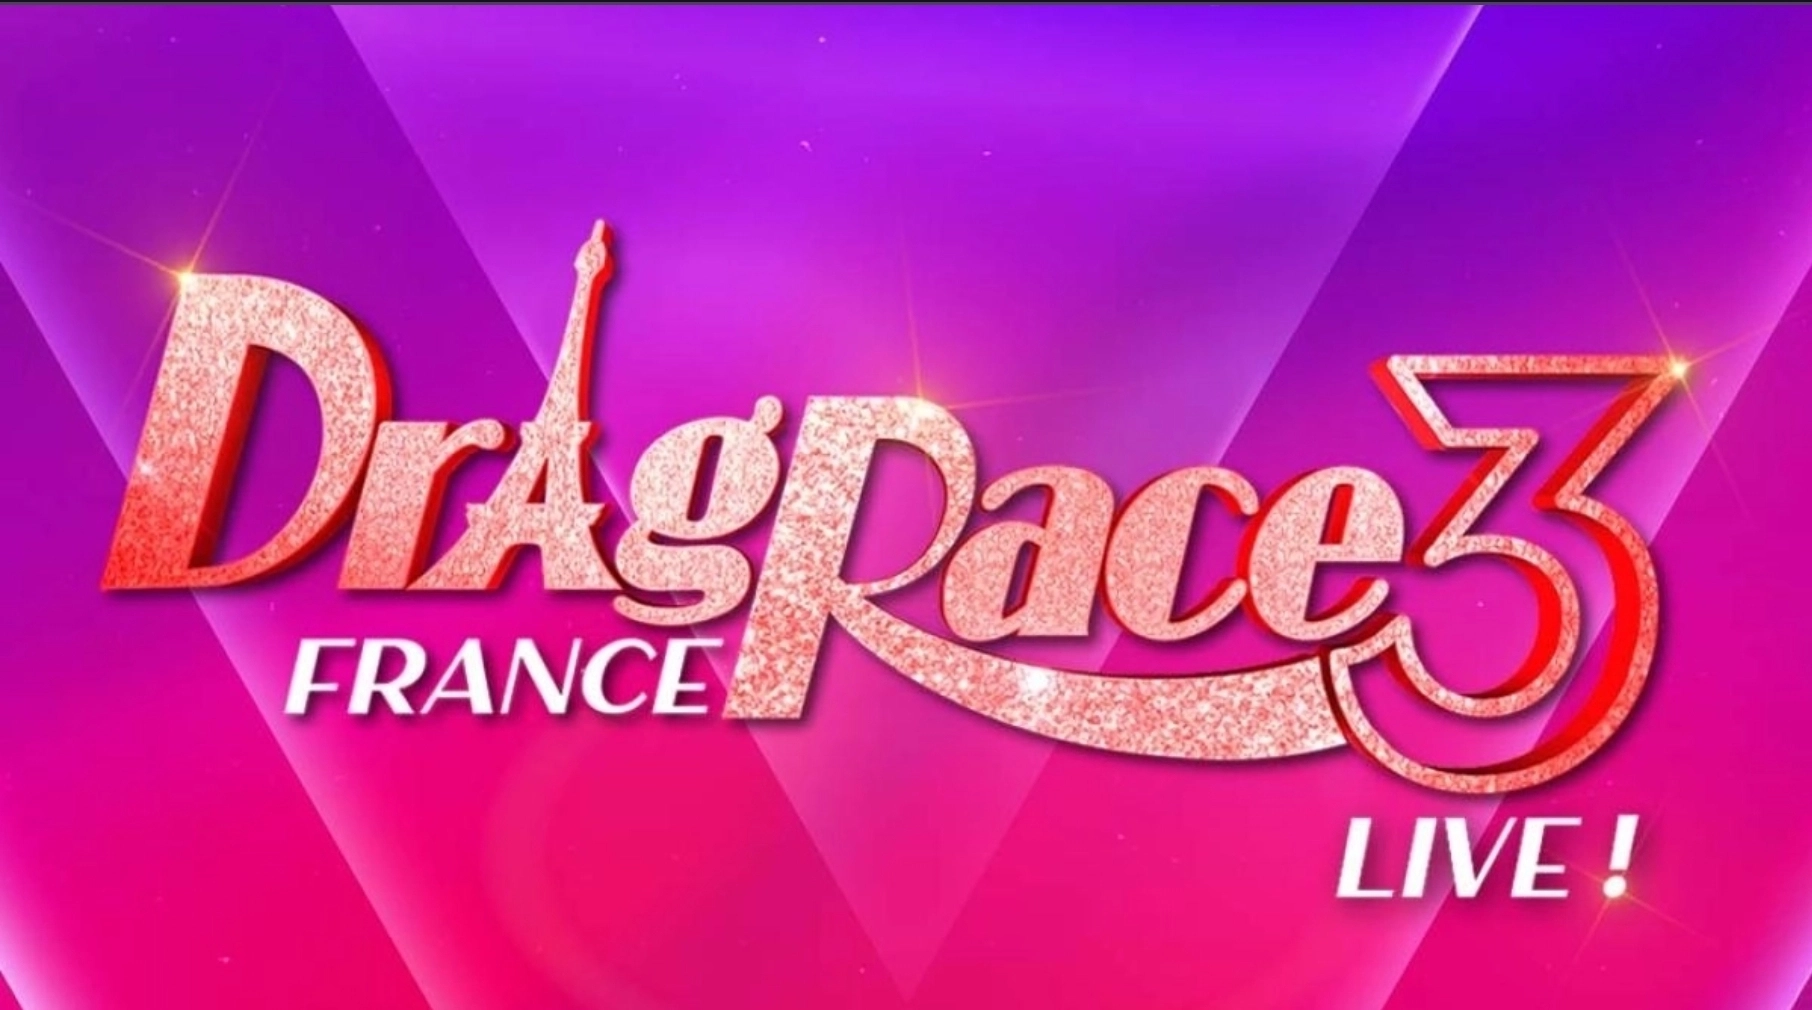 Drag Race France al Summum Tickets